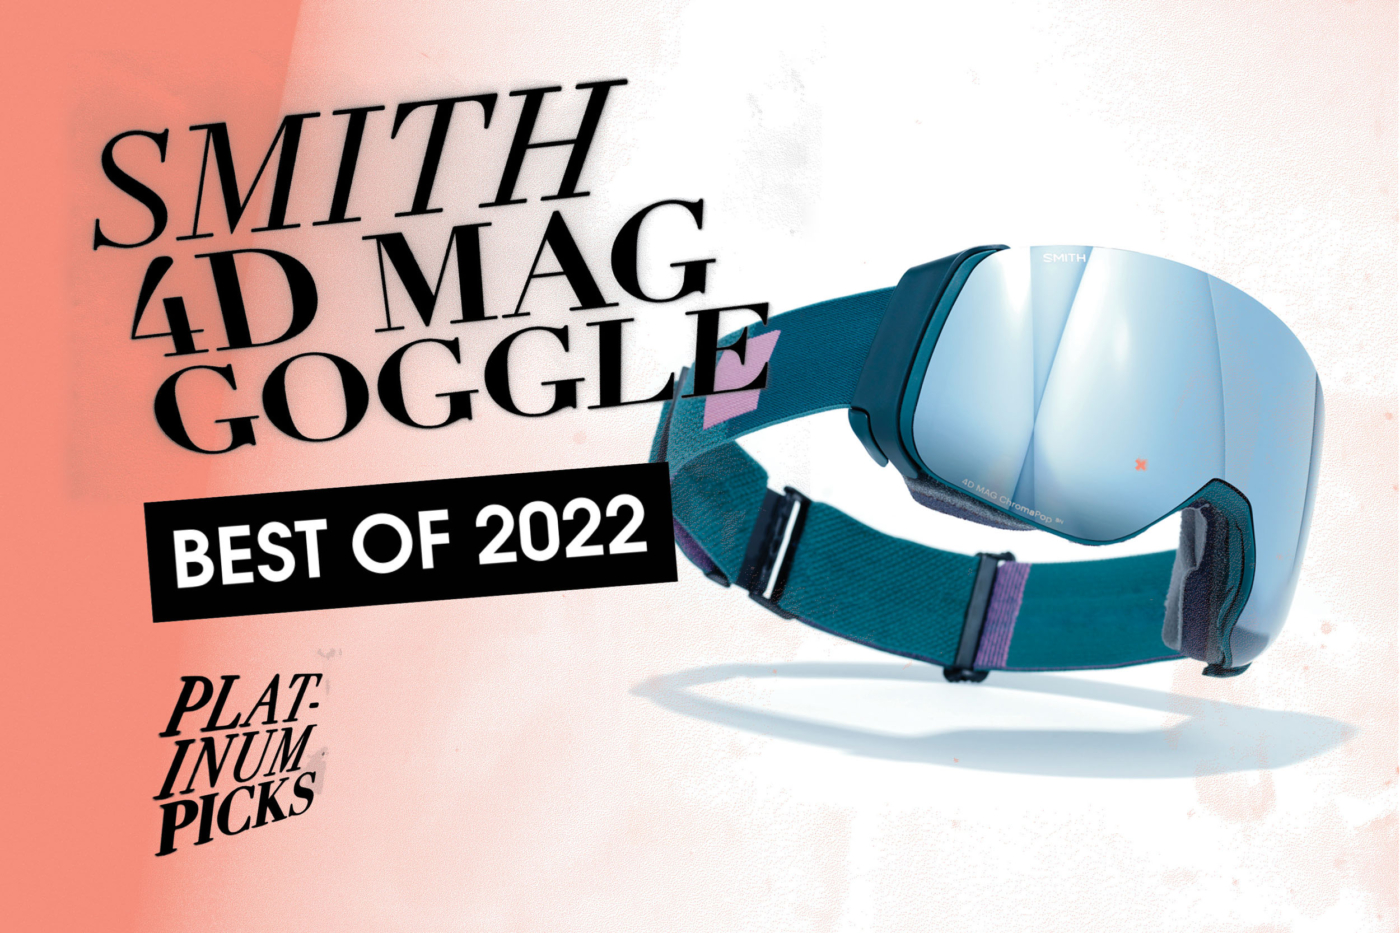 SMith 4D Mag Goggle